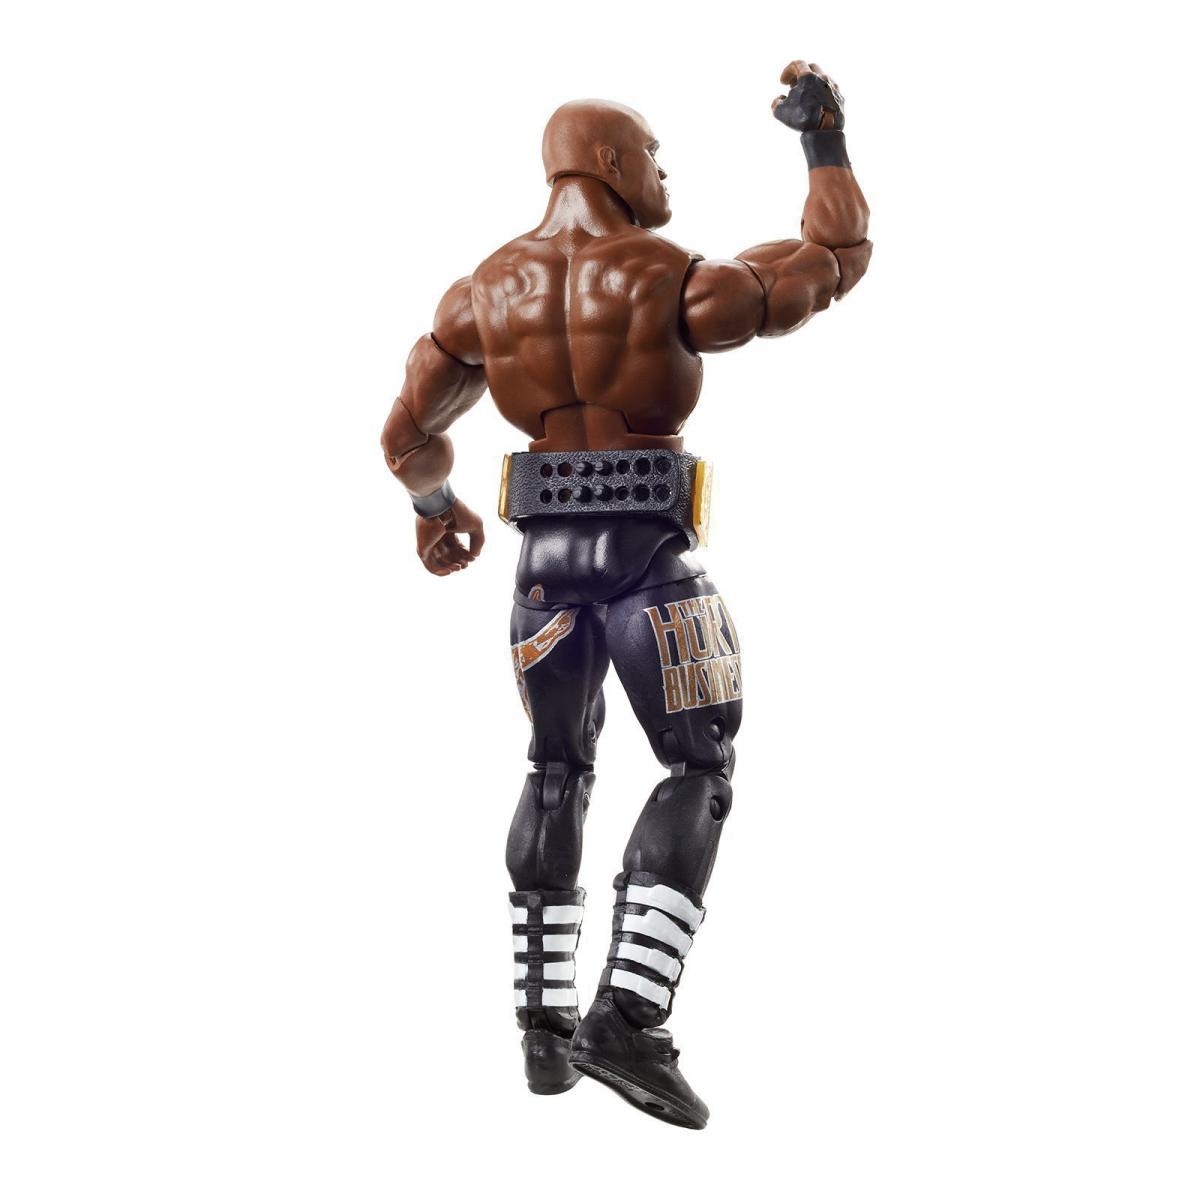 2021 WWE Mattel Elite Collection Series 89 Bobby Lashley